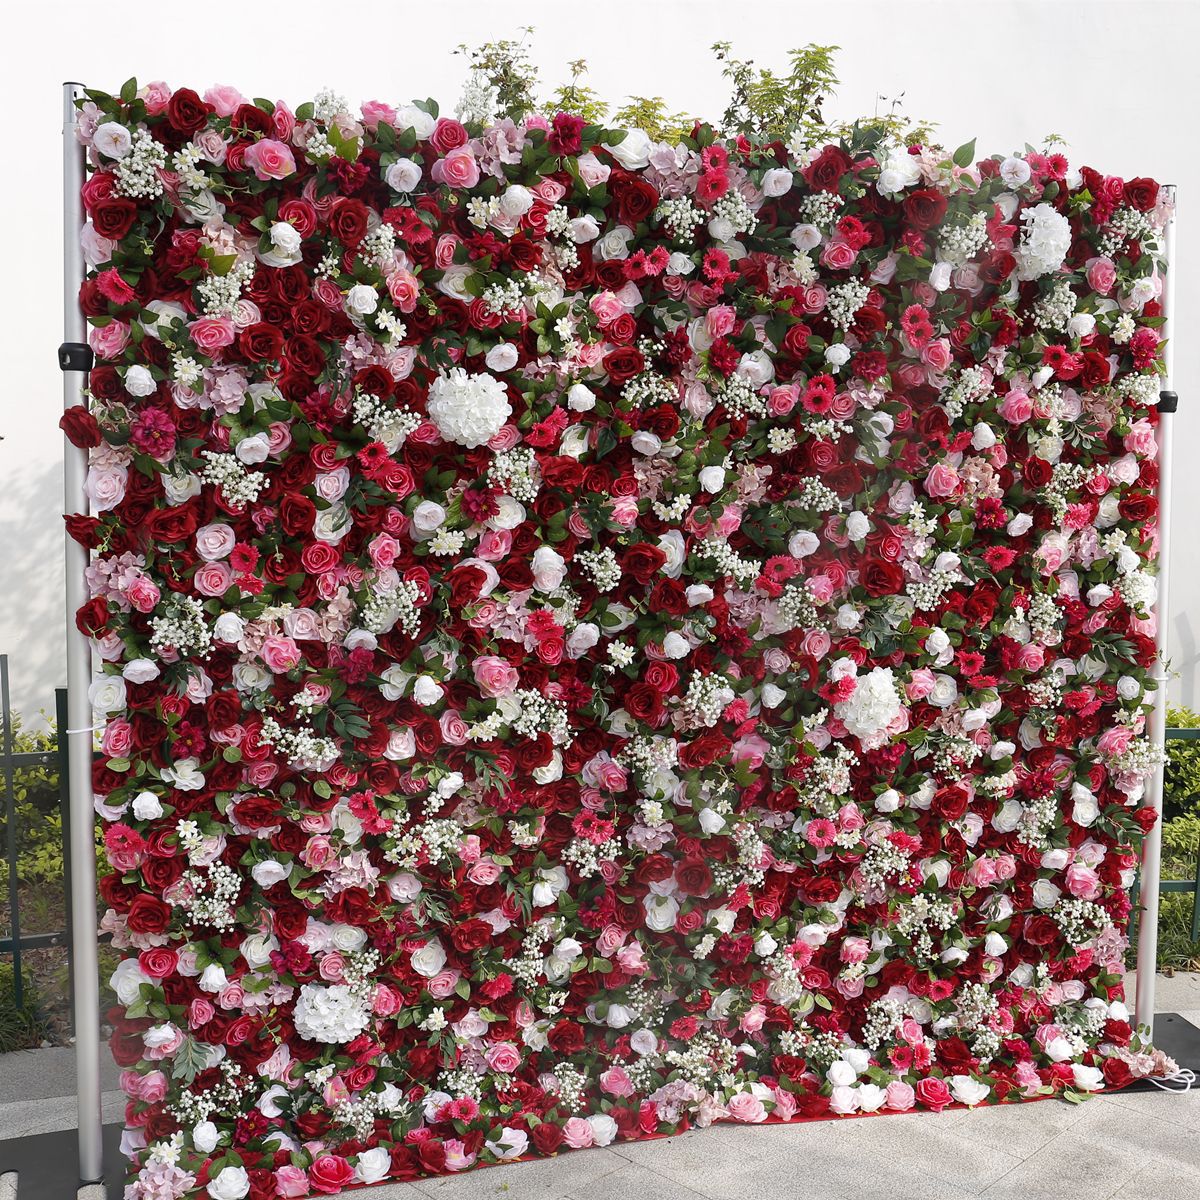 3D Artificial Flower Wall Arrangement Wedding Party Birthday Backdrop Decor HQ3524